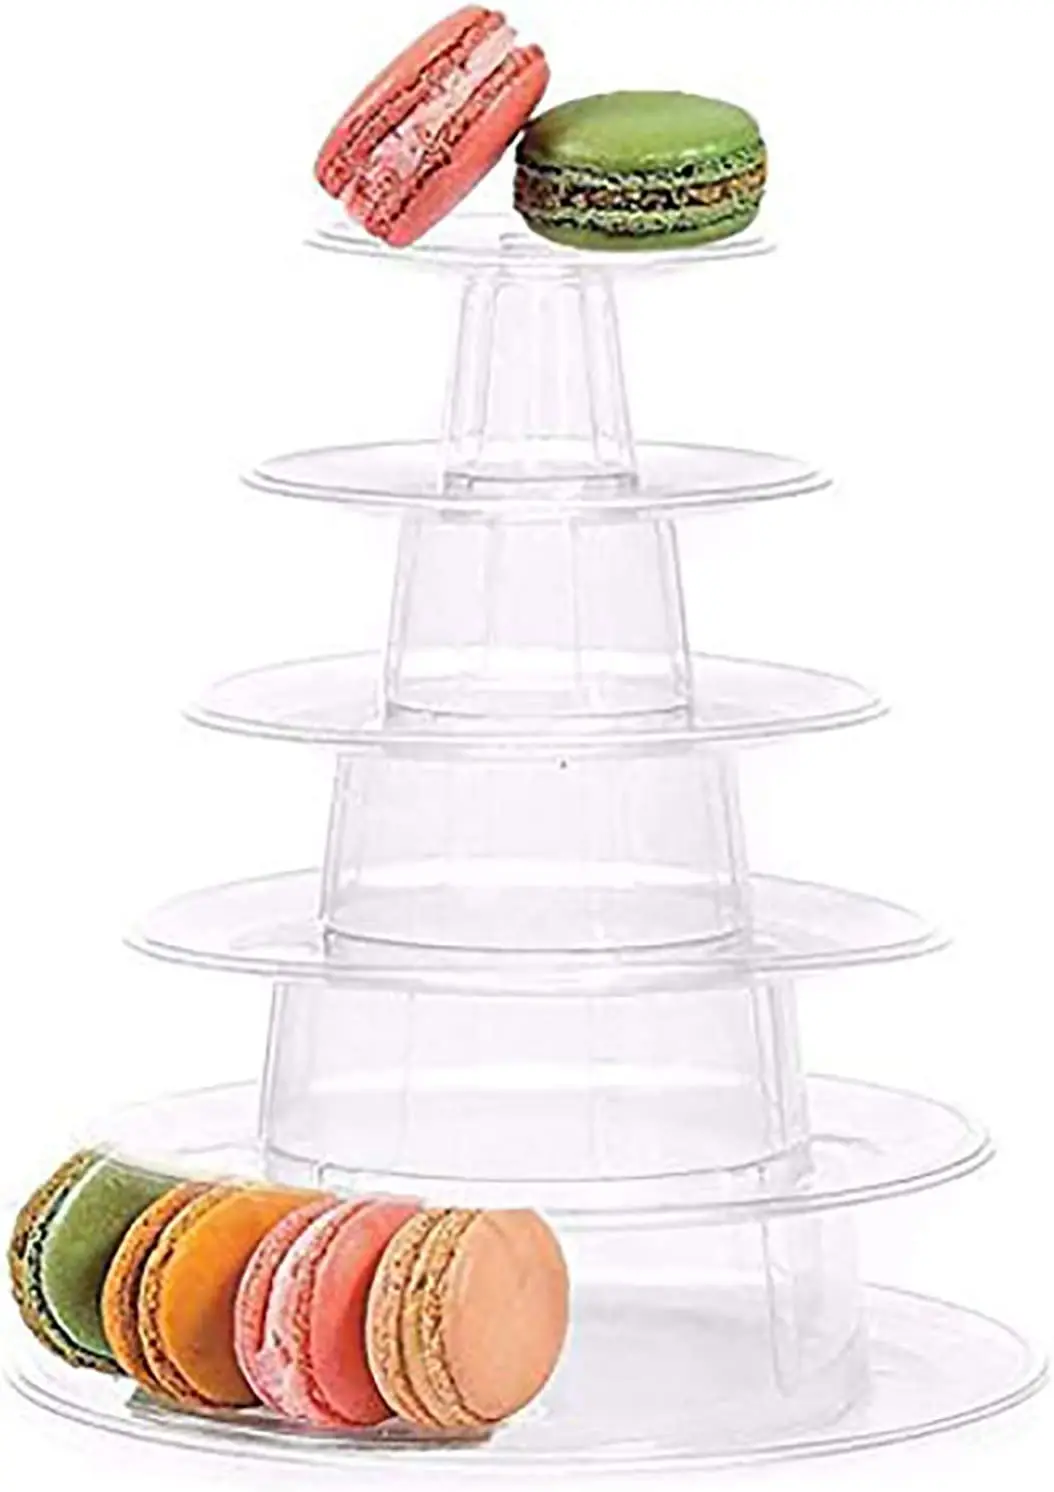 6 Tier Acrylic Macaron Tower Display Stand Clear Round Tray Display Shelf Rack Plastic Cake Dessert Stand For Christmas Wedding